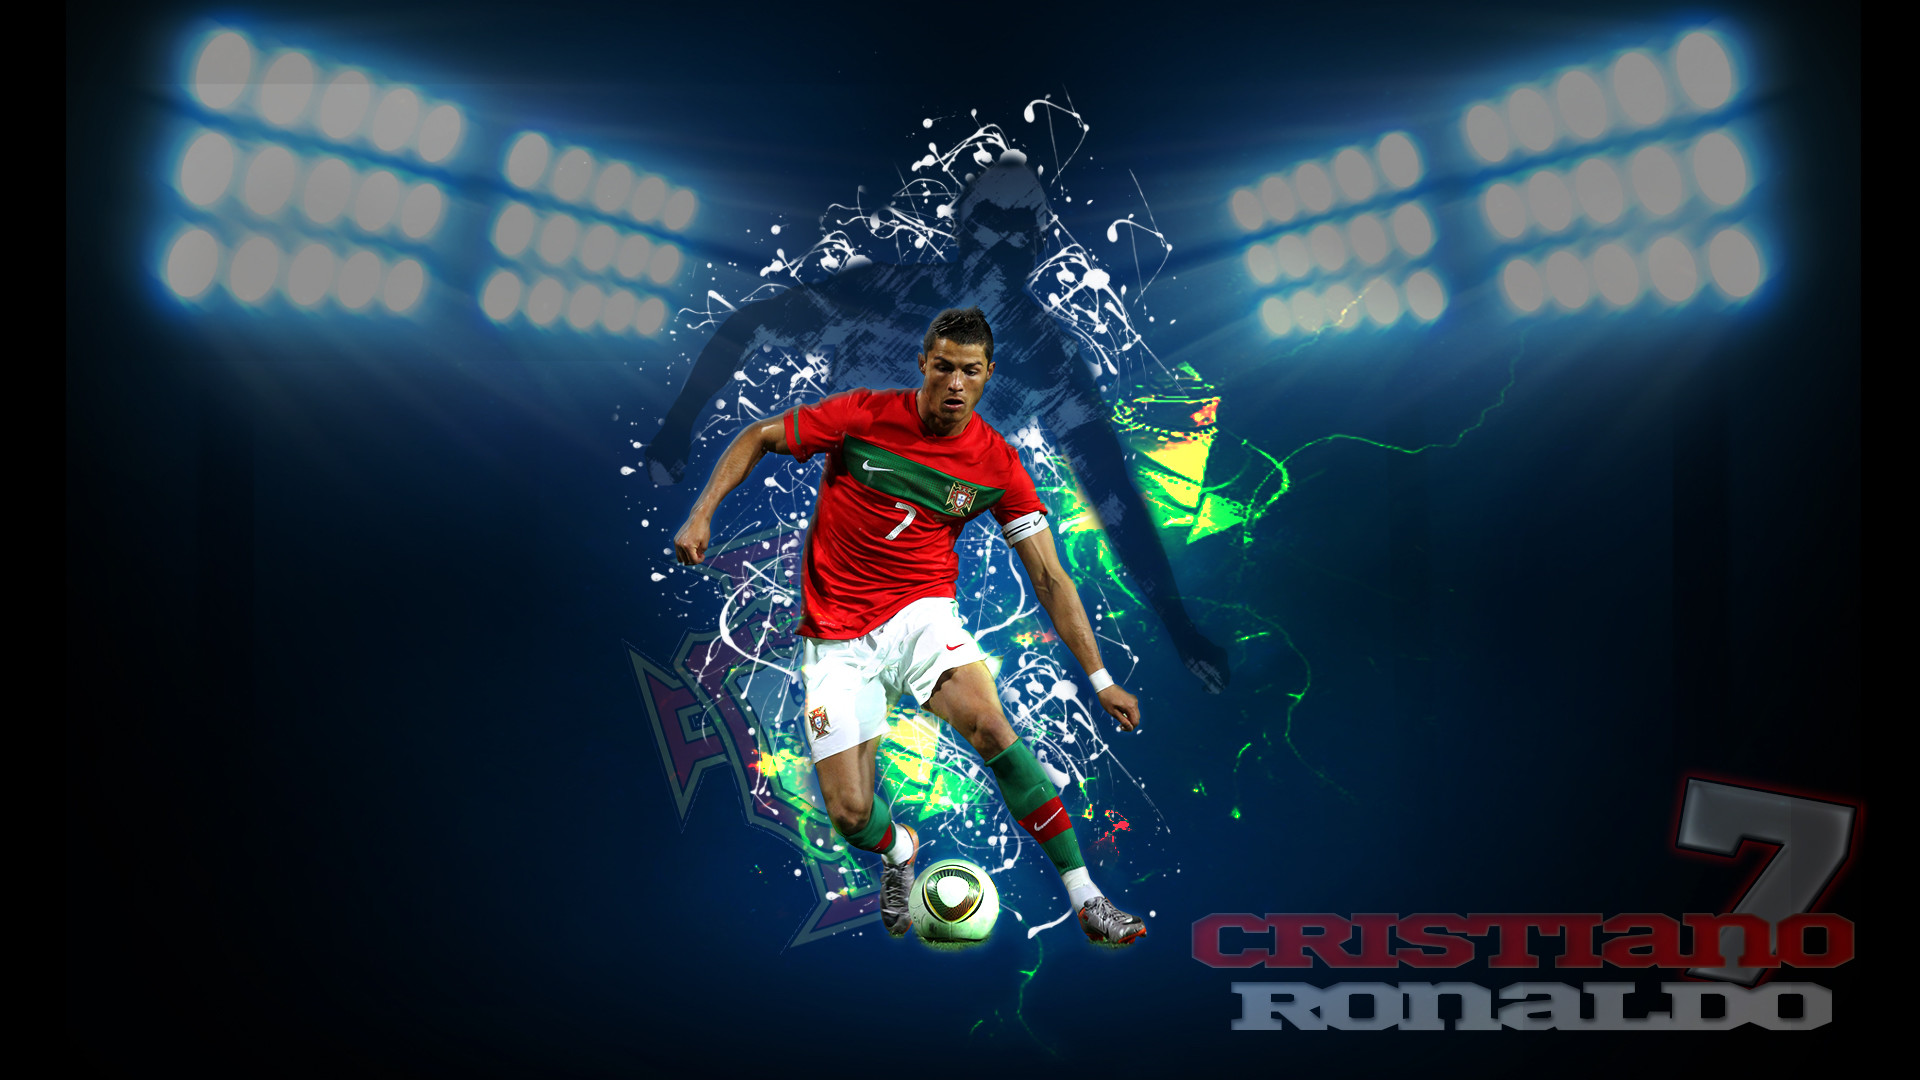 Cristiano Ronaldo Wallpaper Nike Image